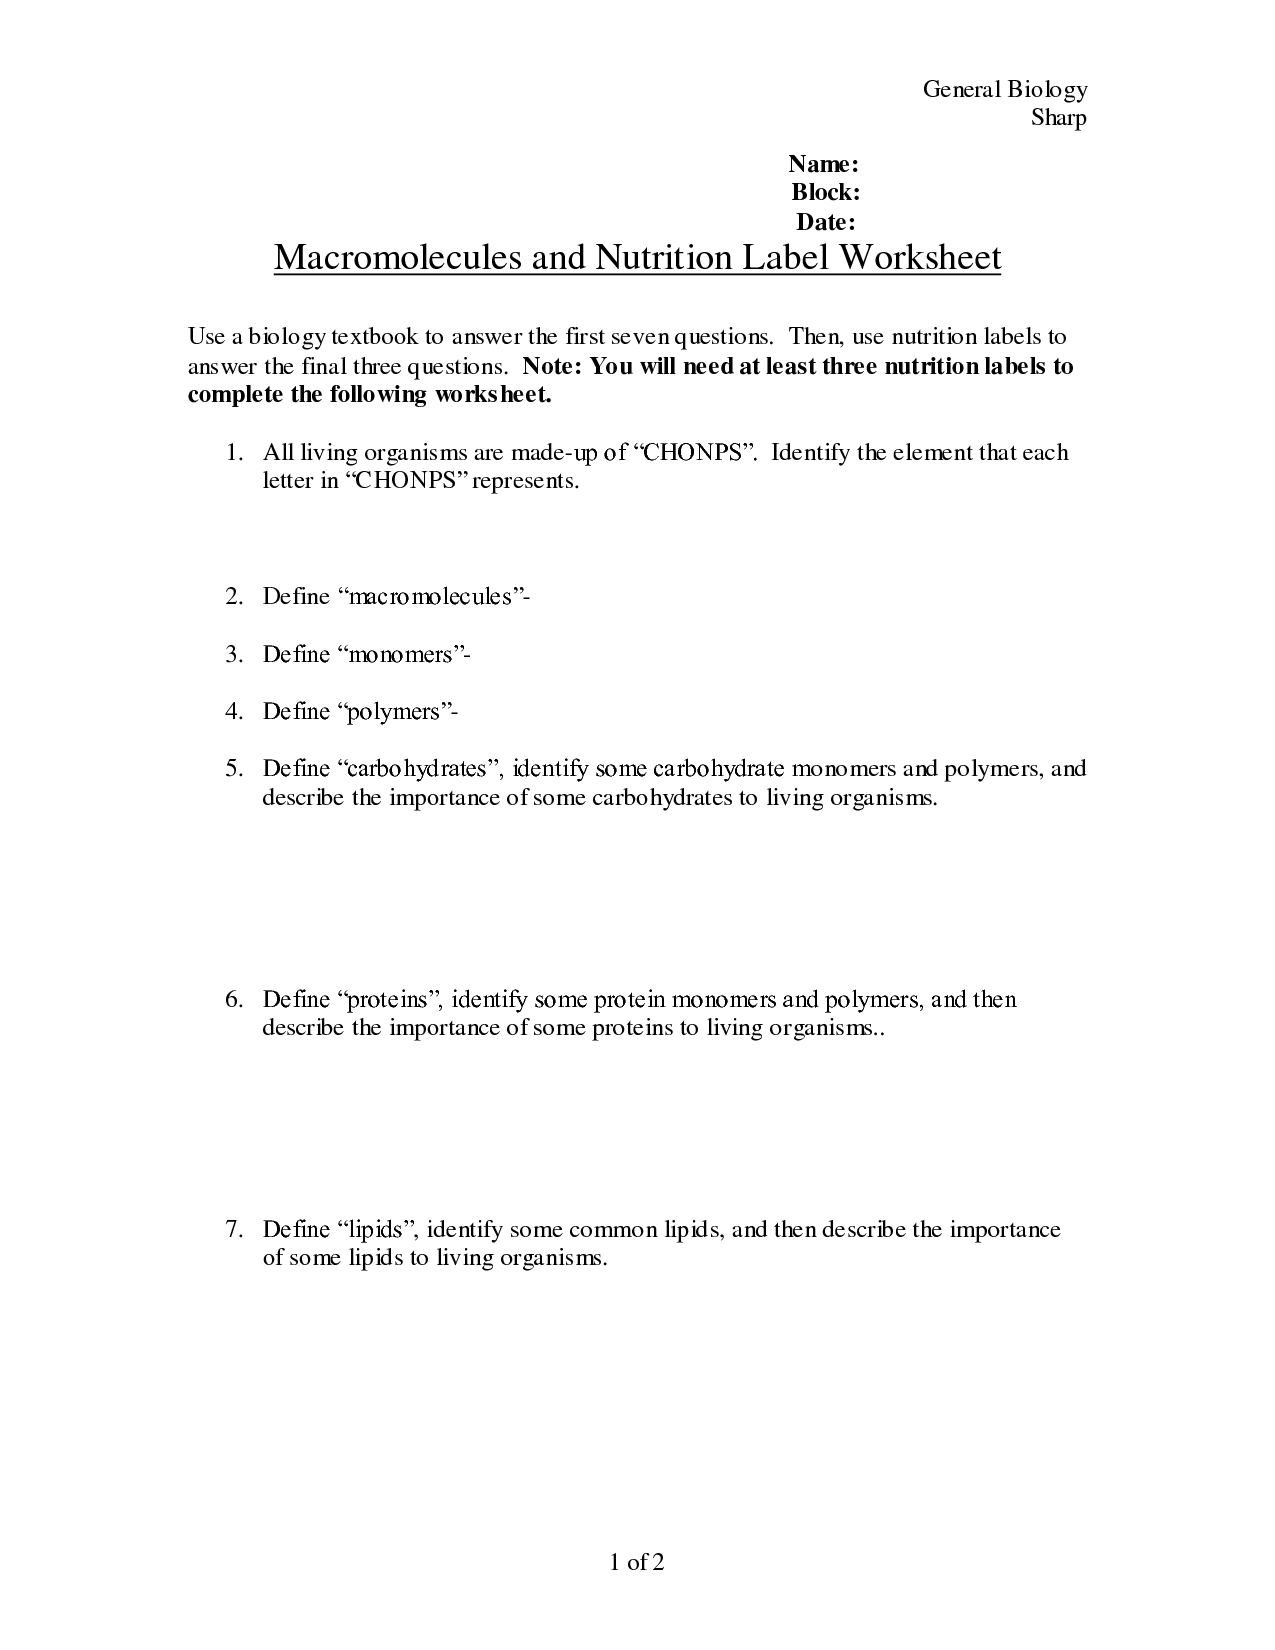 Label and Nutrition Worksheet Macromolecules Image